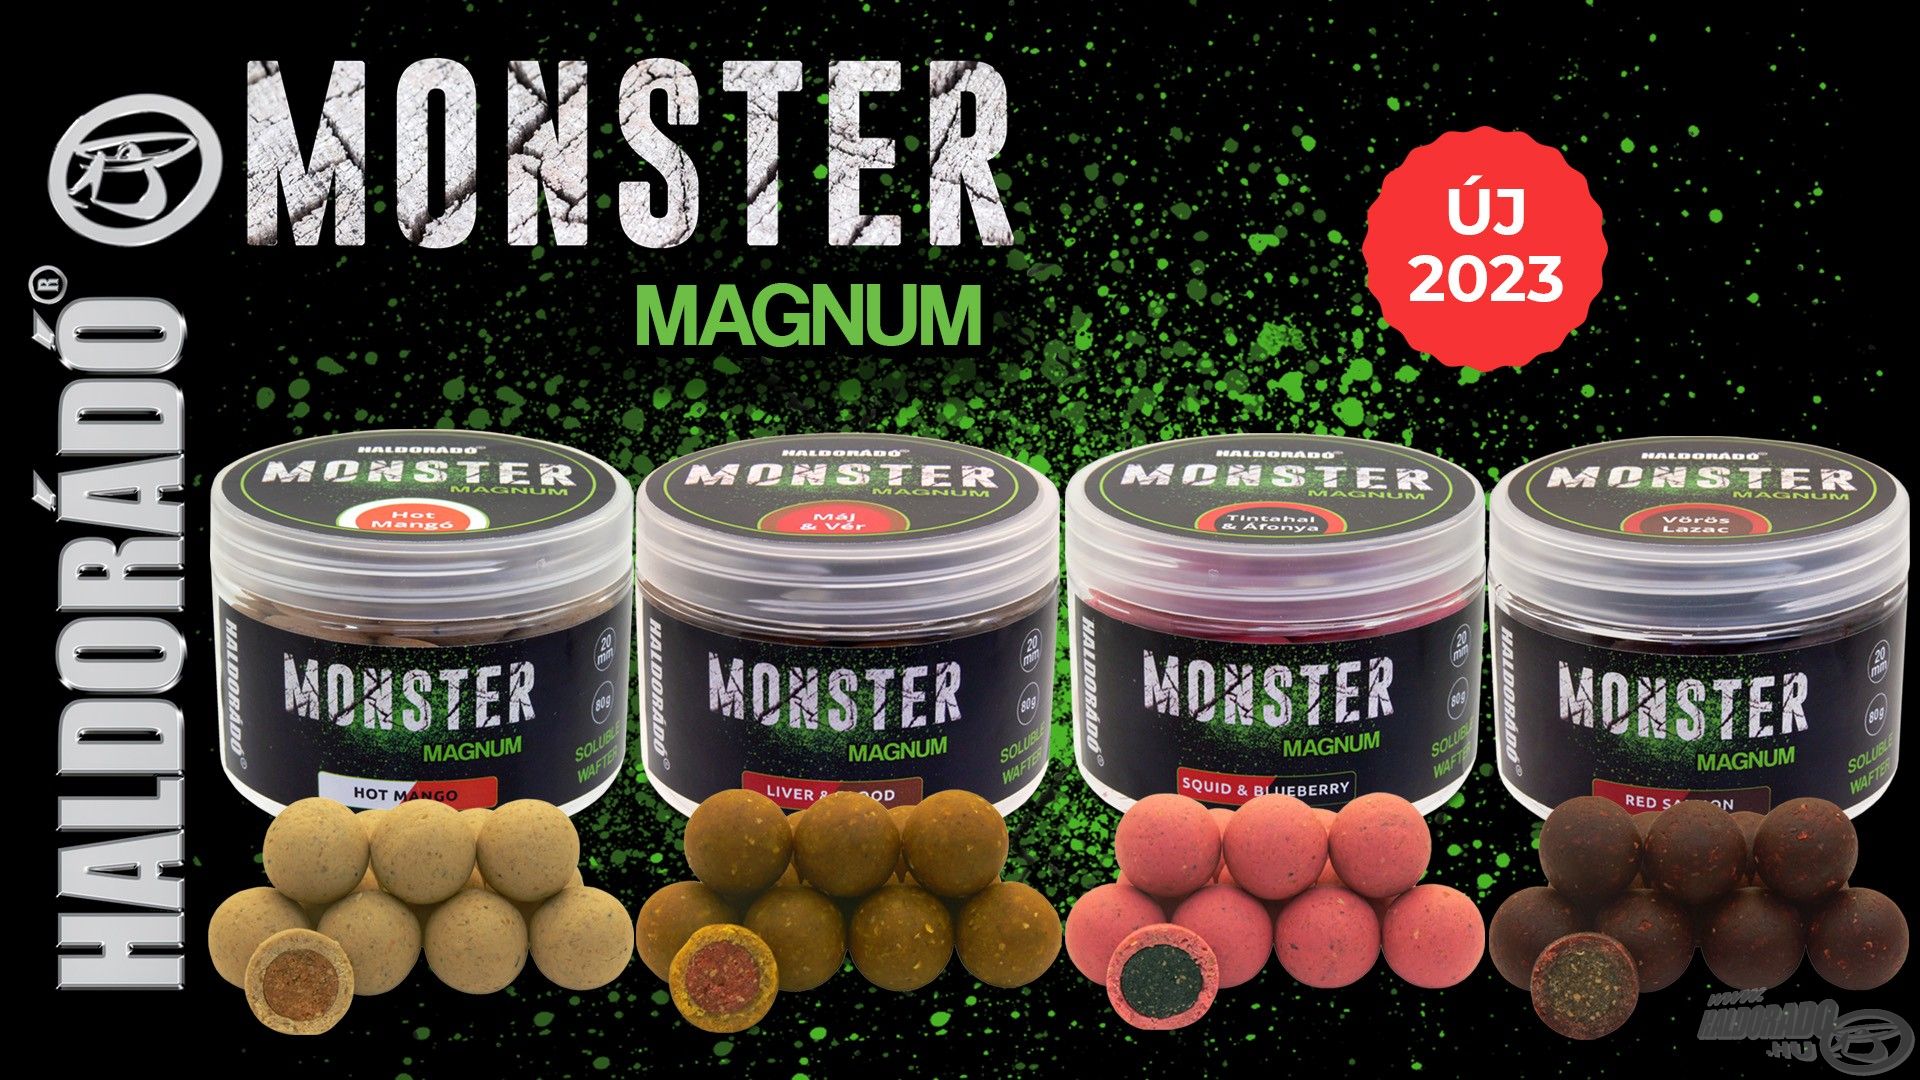 Íme, a MONSTER Magnum termékcsalád!